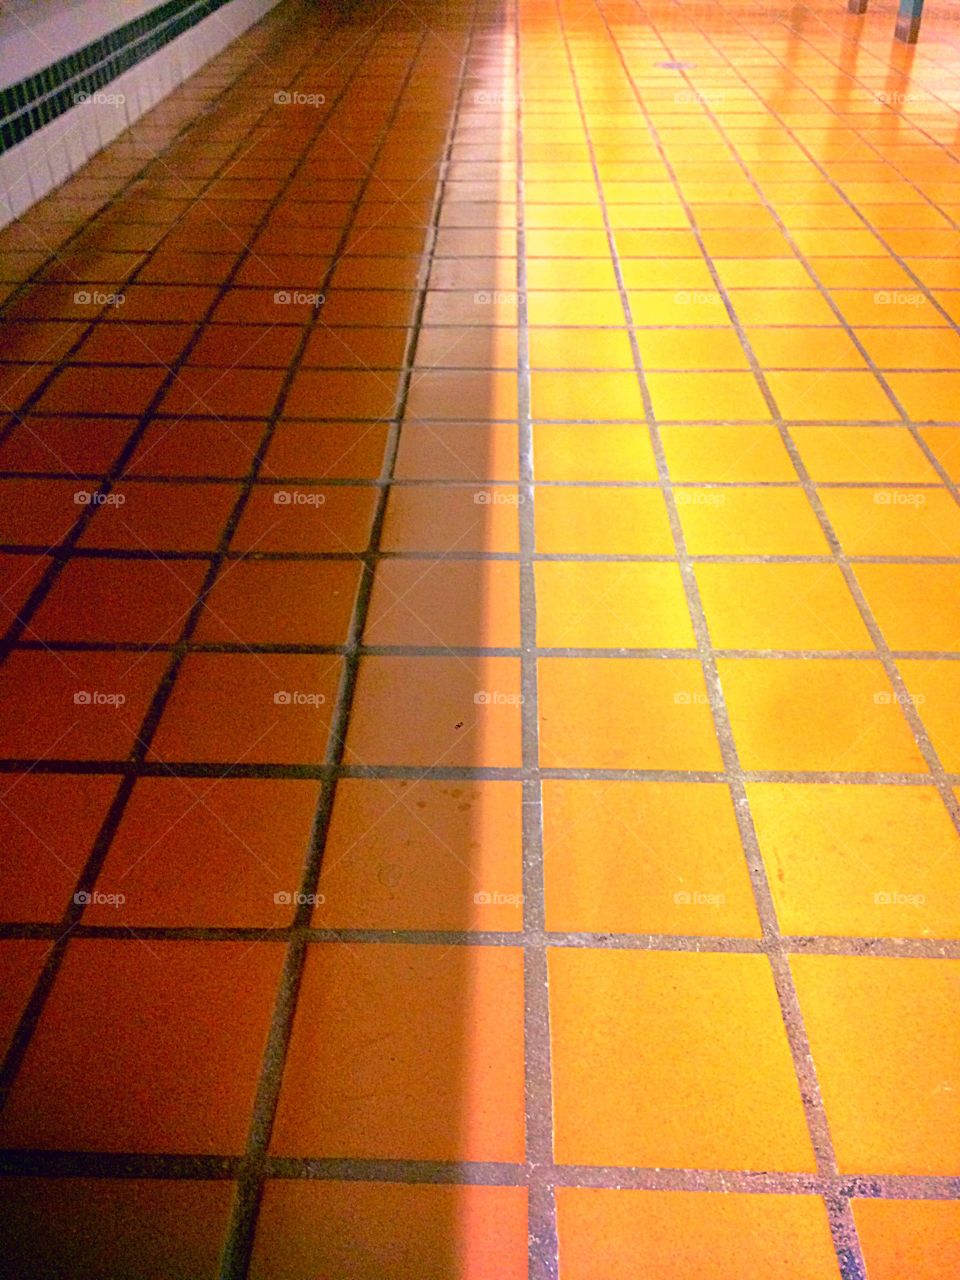 Orange tiles
